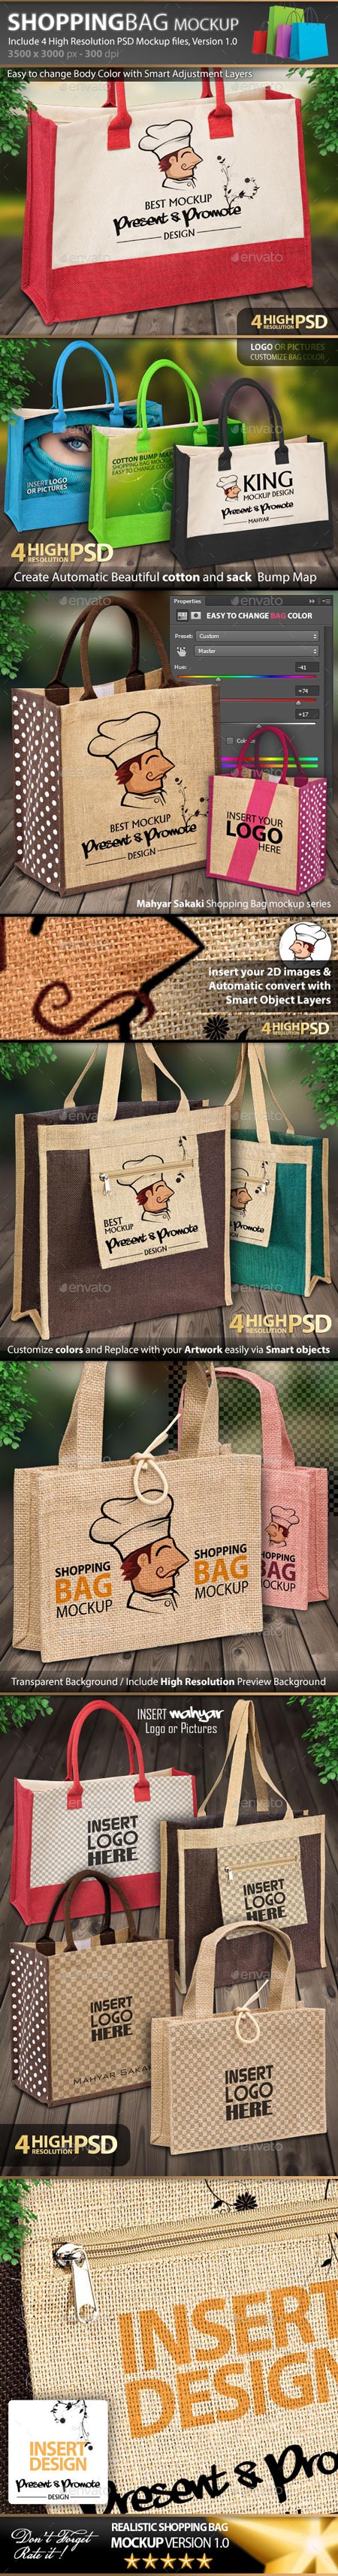 Photorealistic Shopping Bag Mockup V1.0 8929092